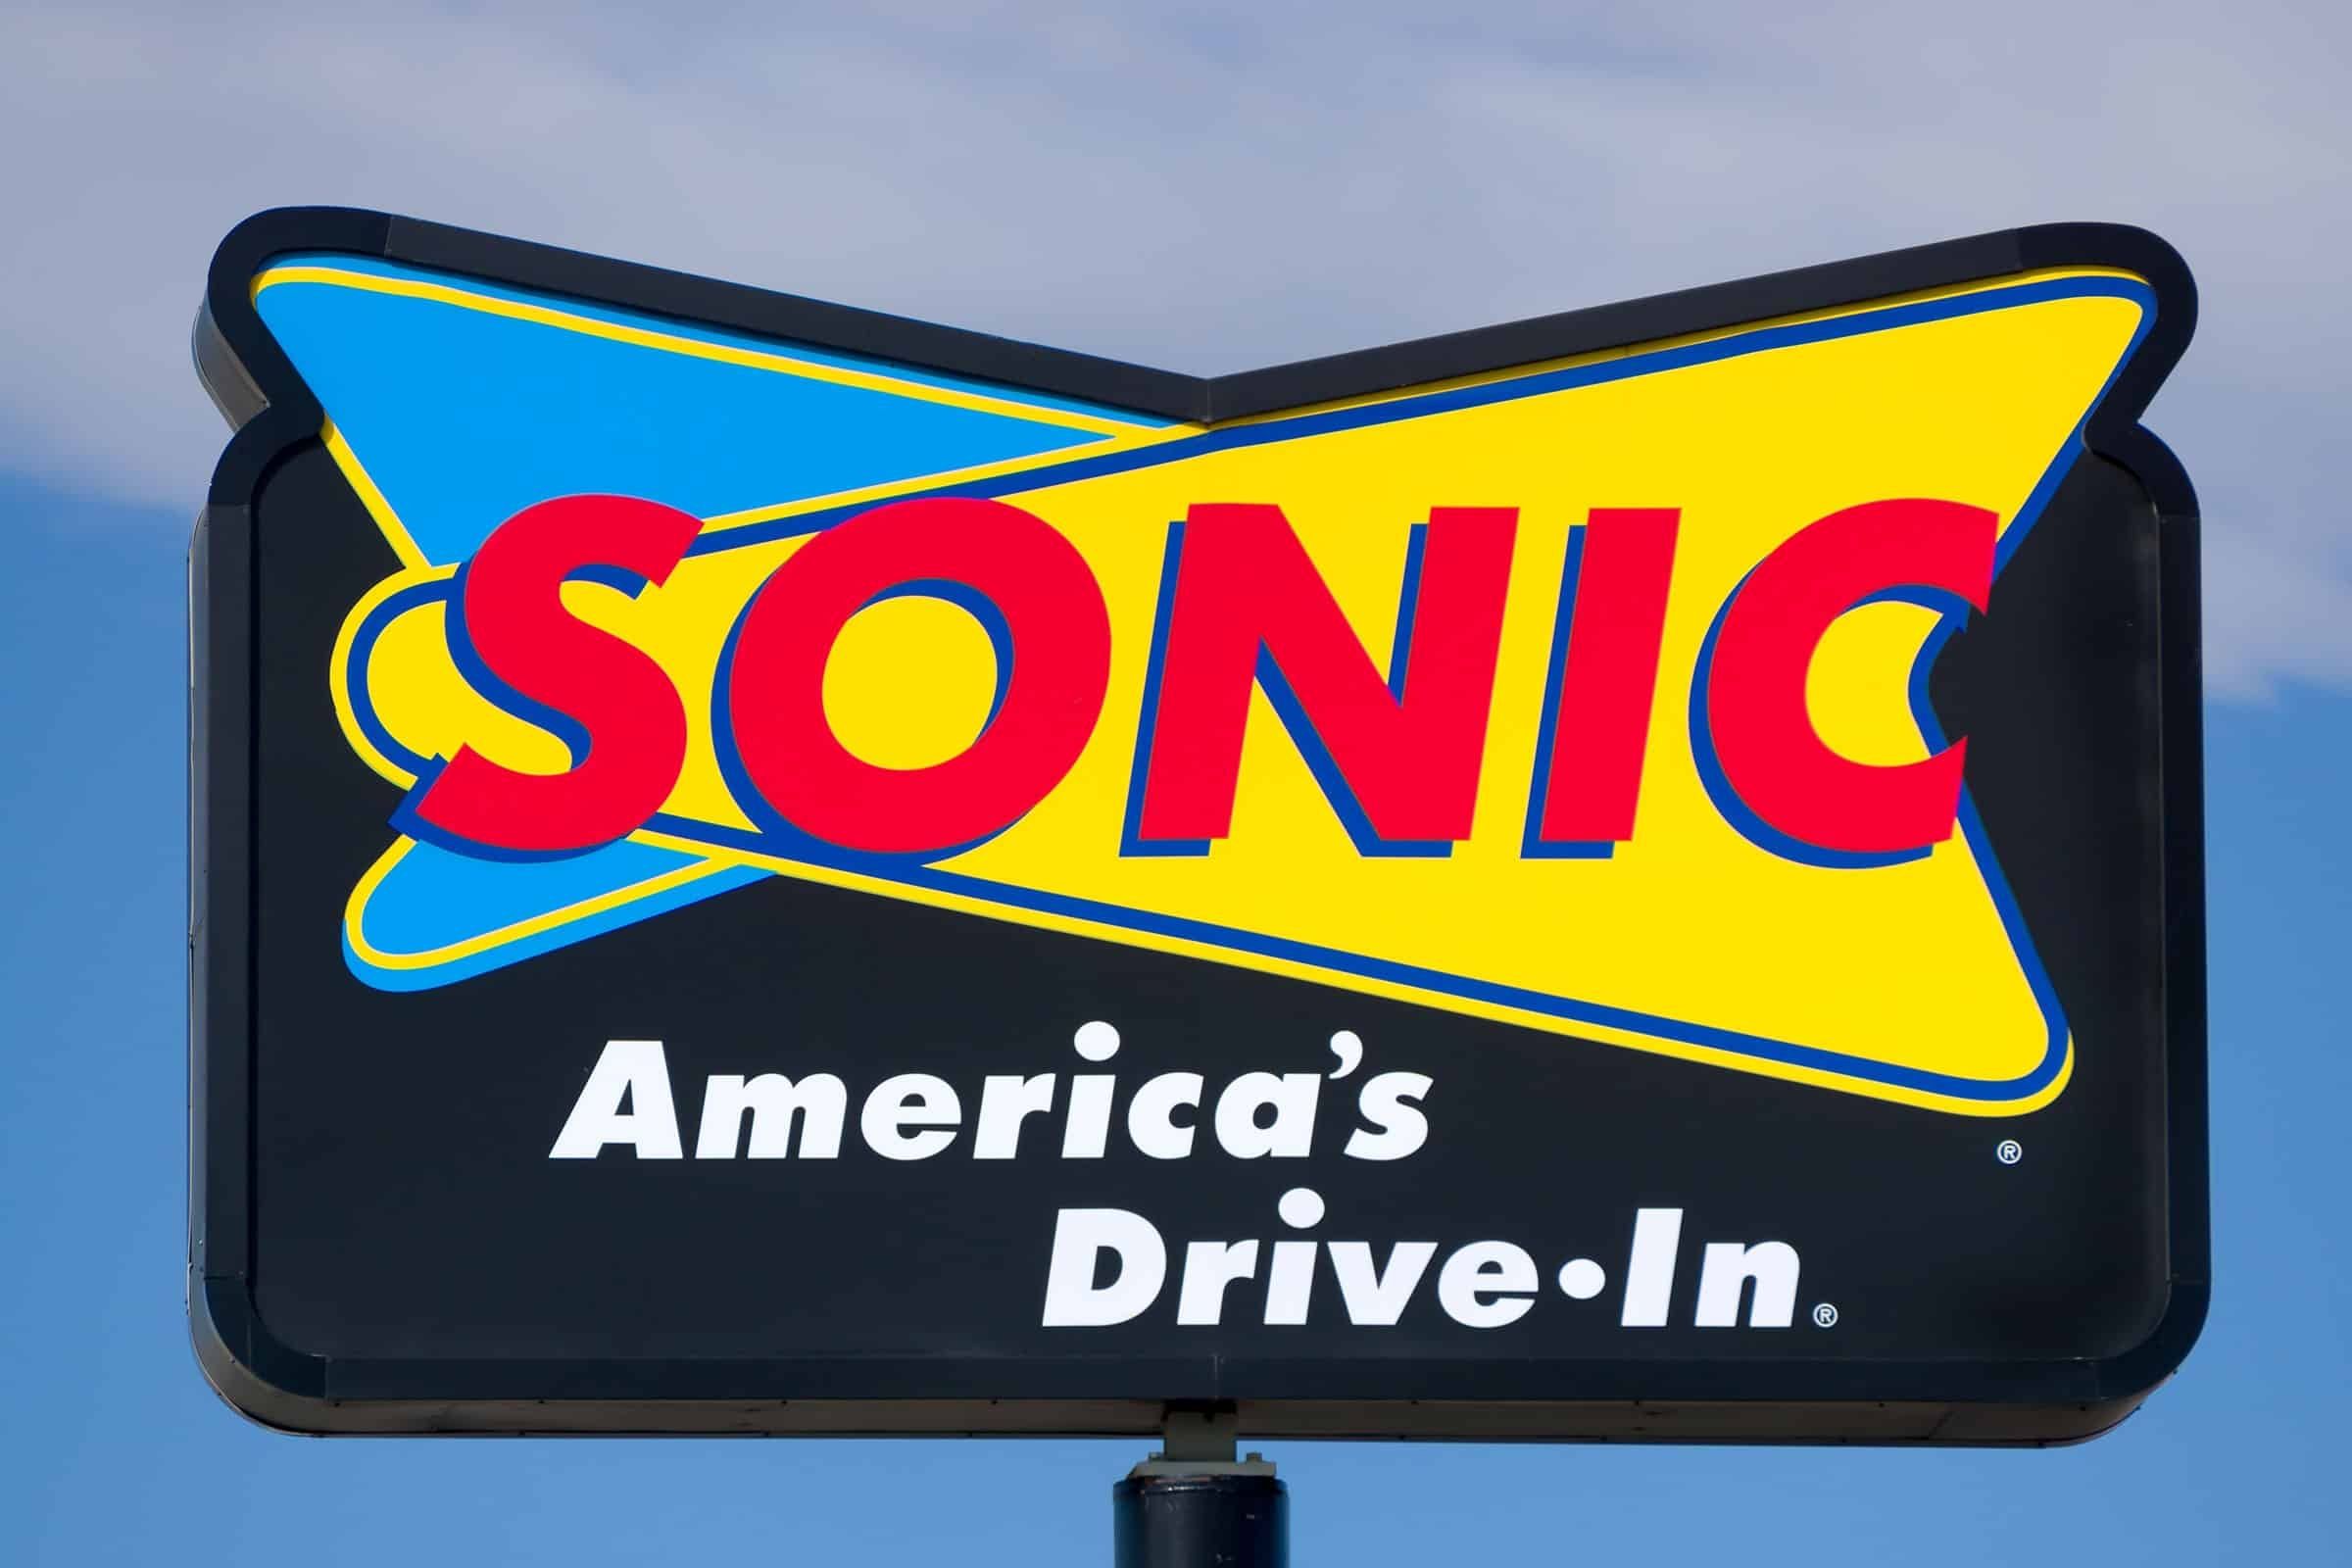 sonic-drive-in-roadside-sign.jpg